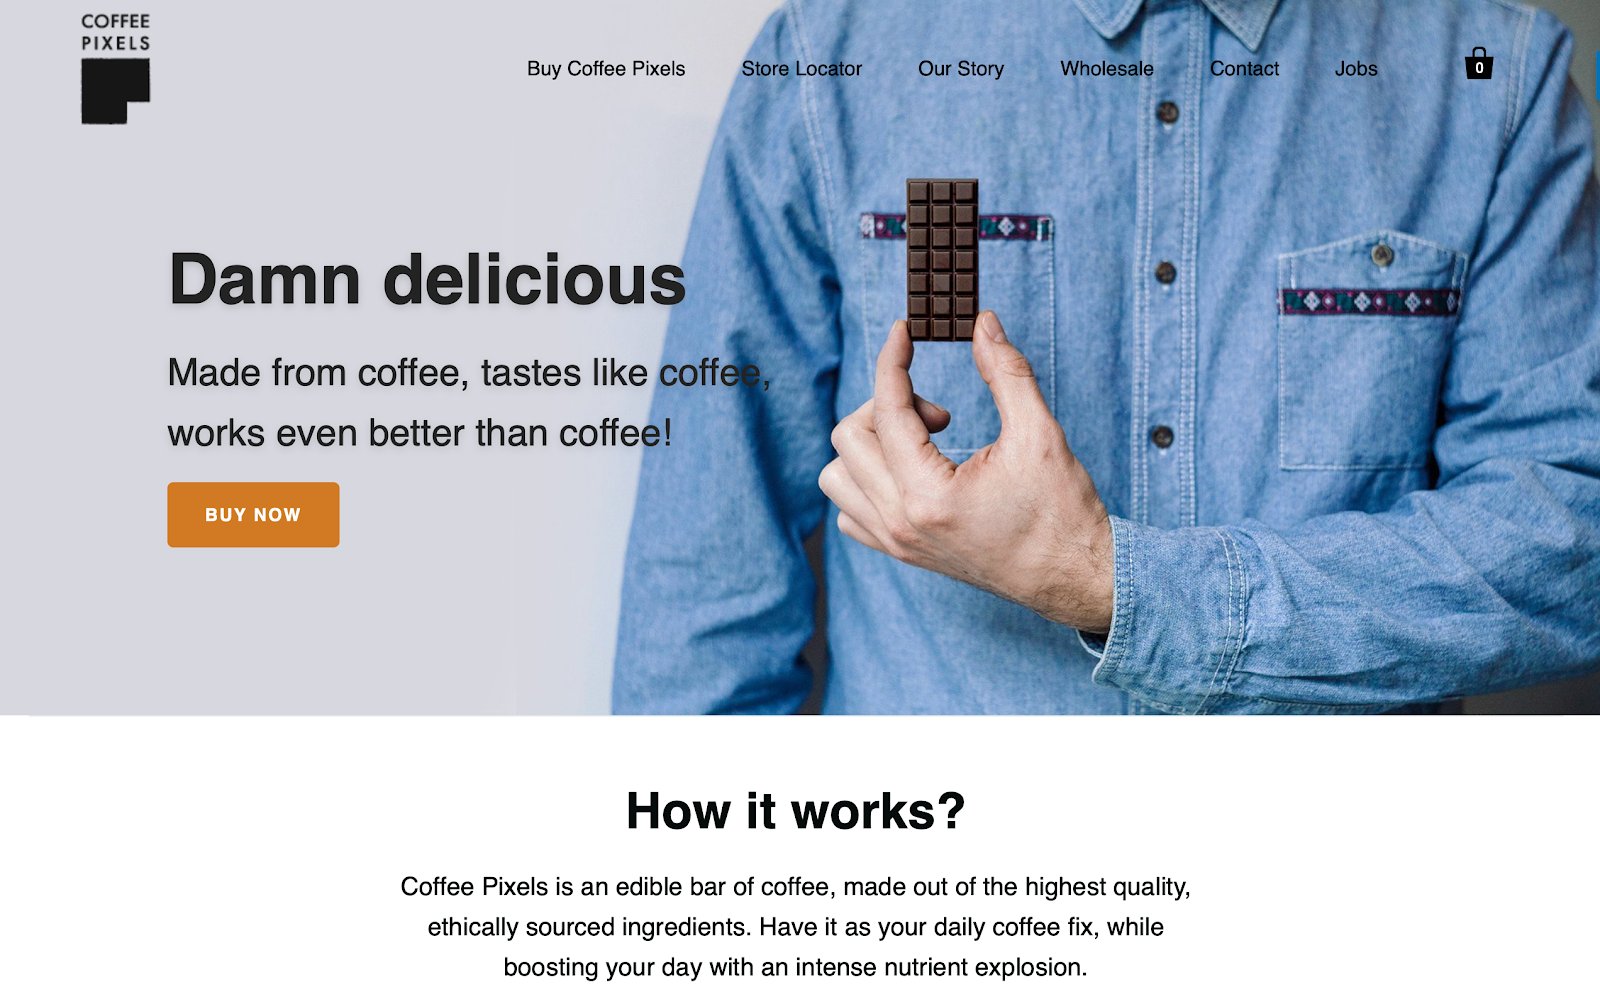 how-we-created-a-caffeinated-chocolate-bar-product